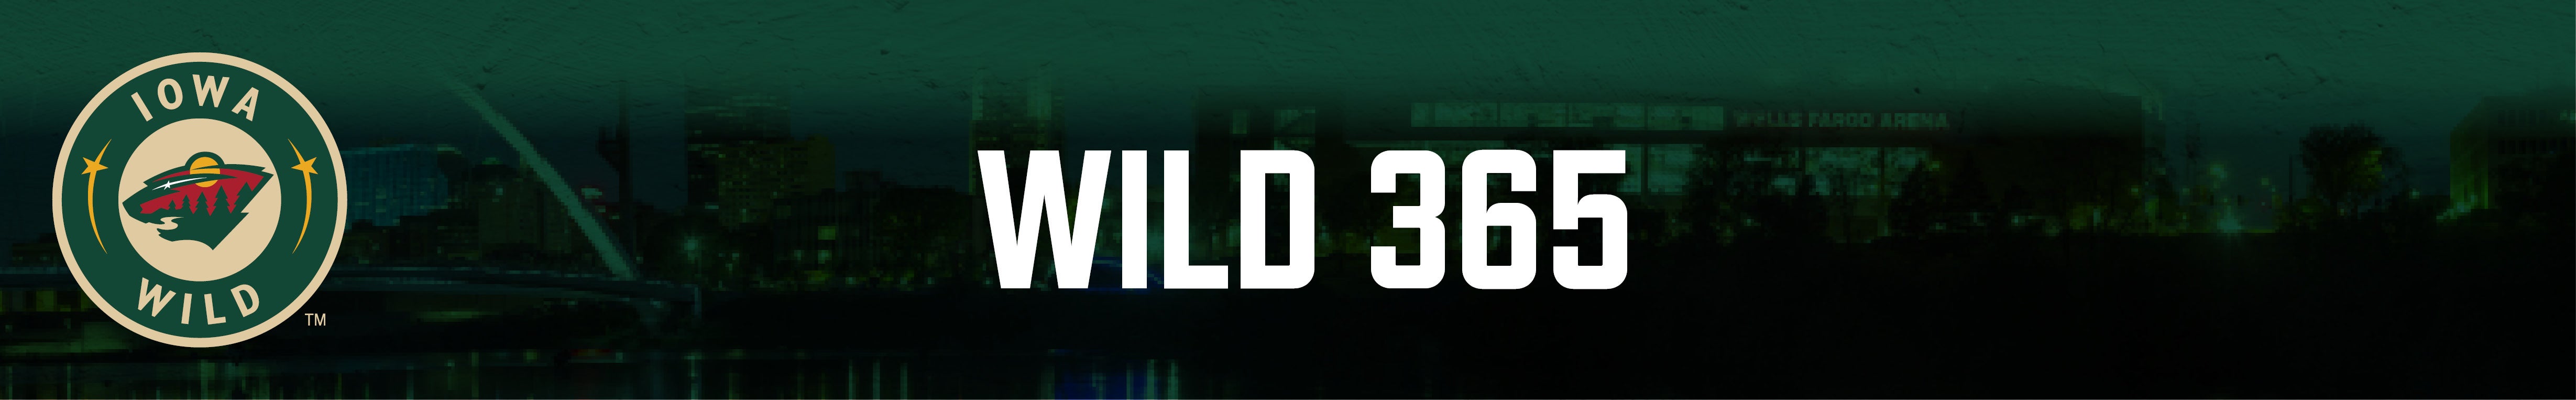 Wild 365 Hub